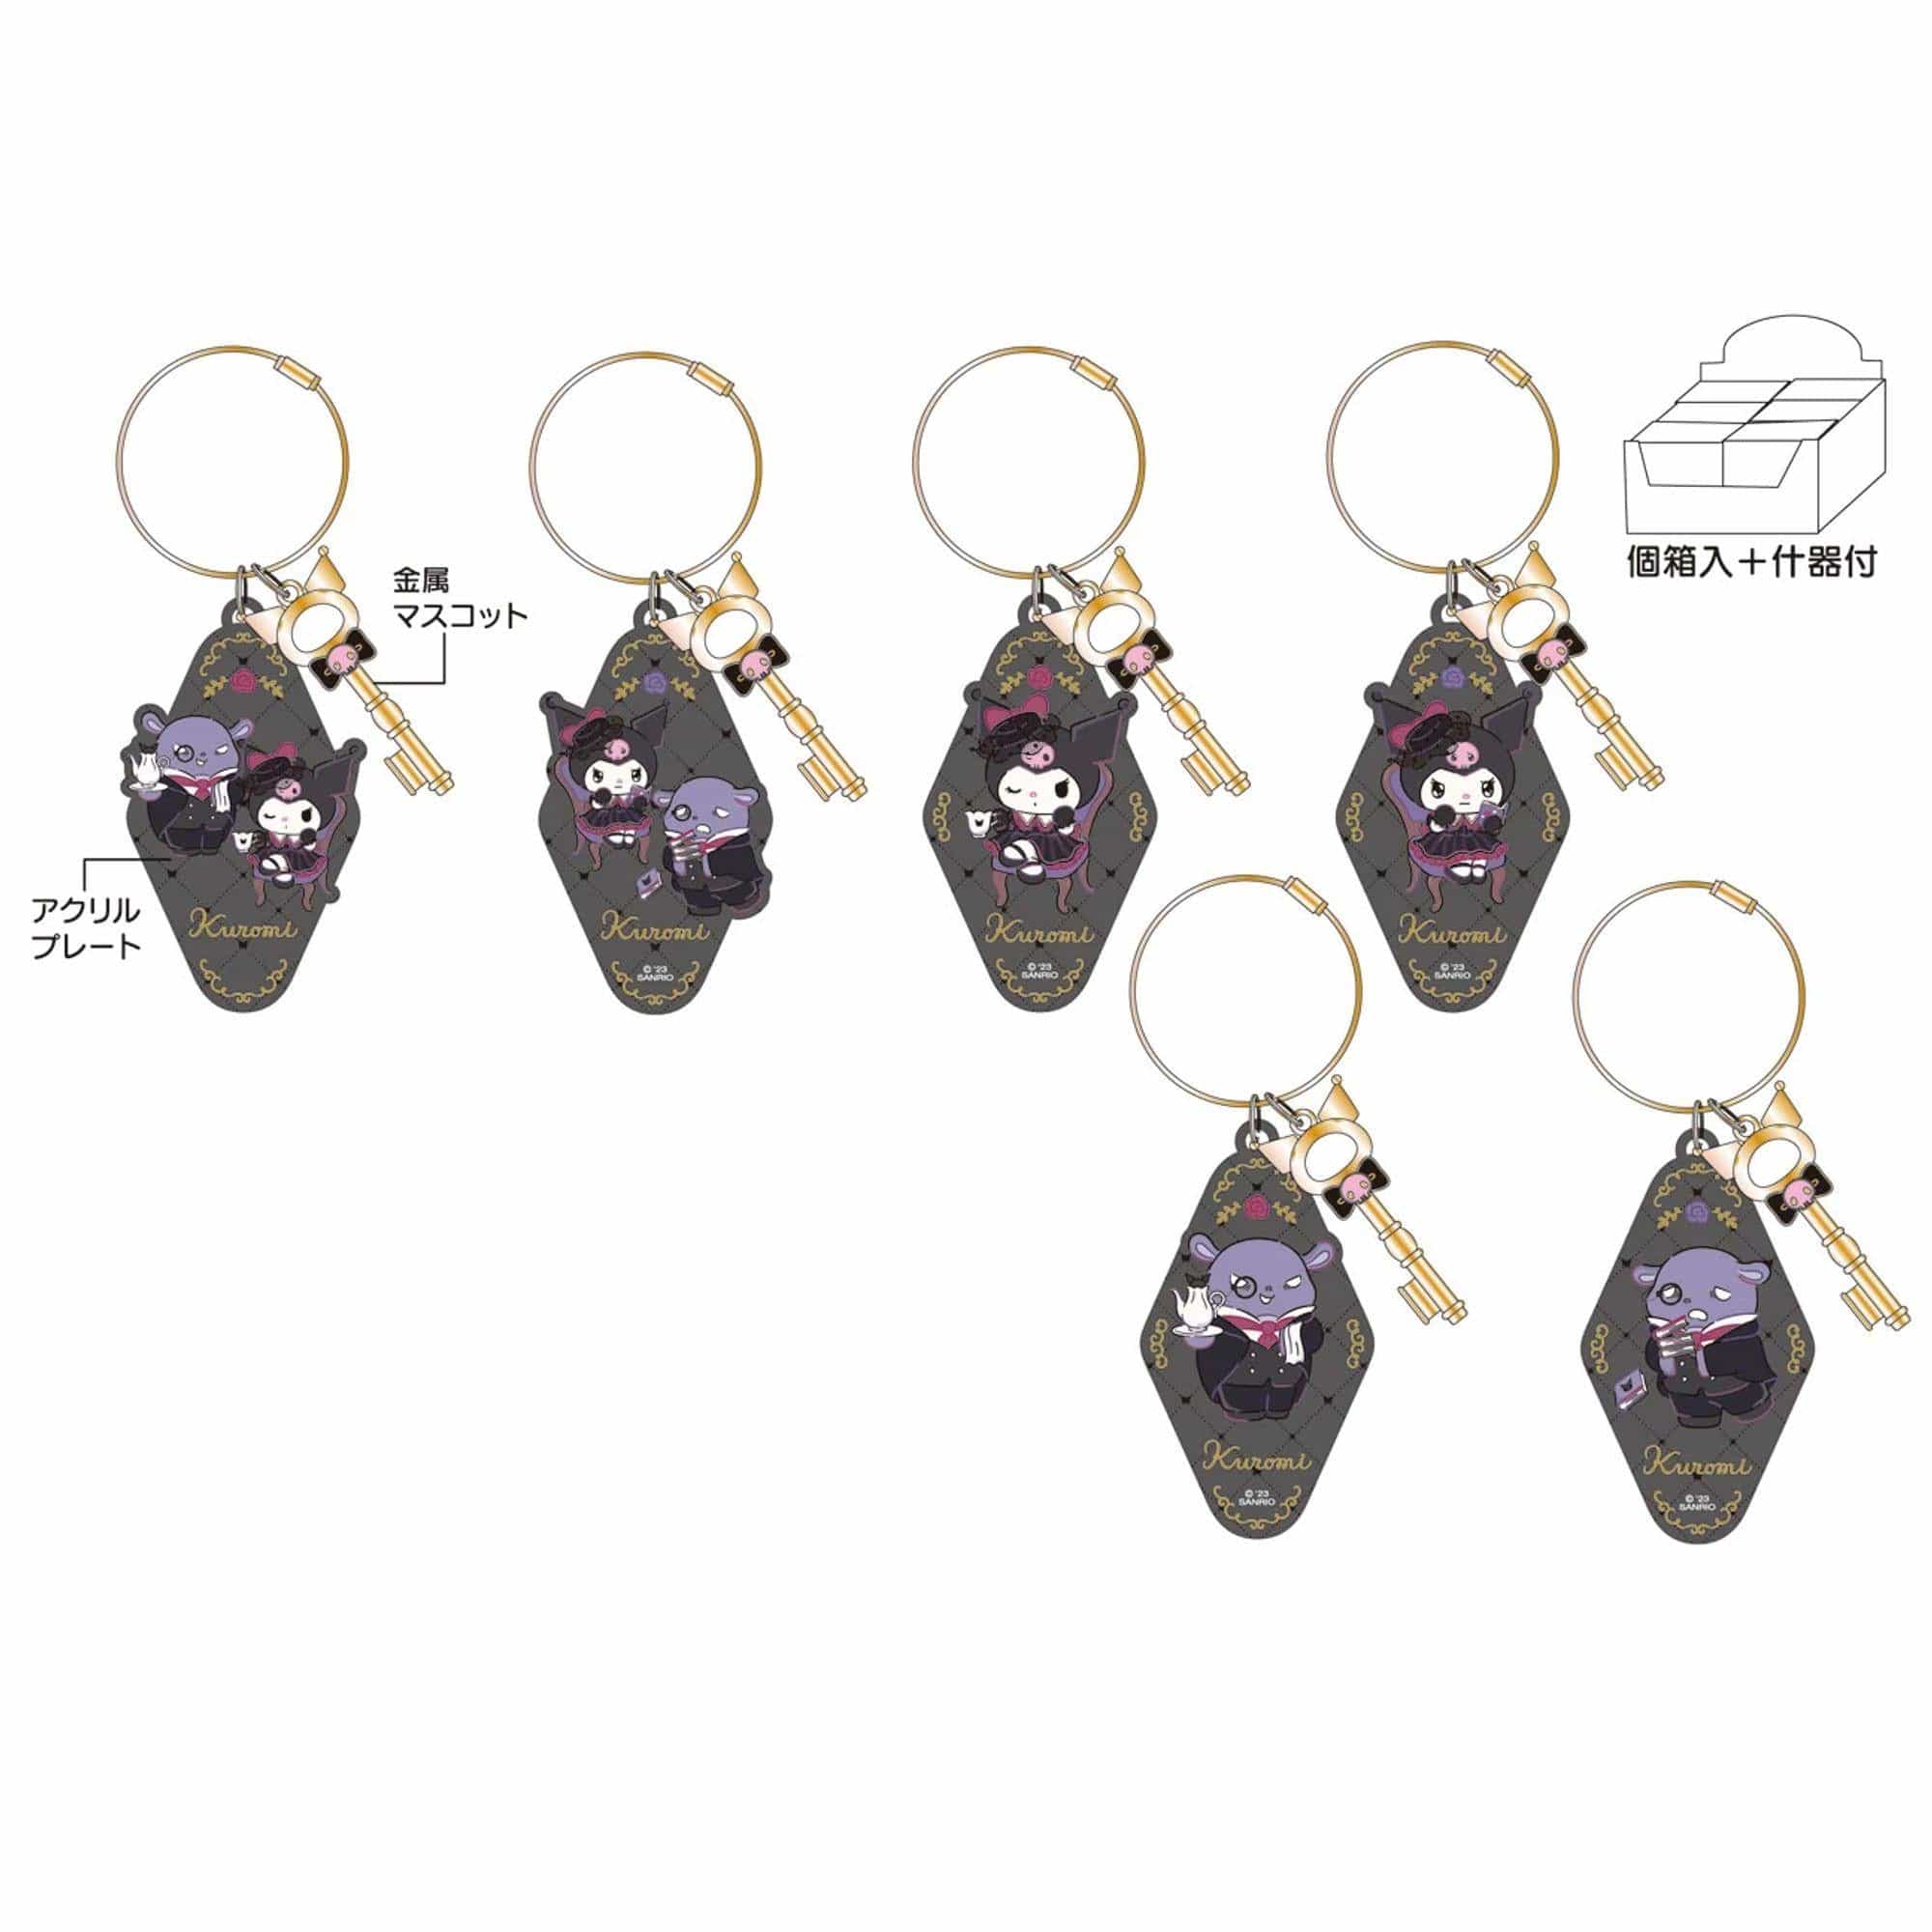 Enesco Sanrio Ojo Kuromi Princess Keychain Surprise Box Kawaii Gifts